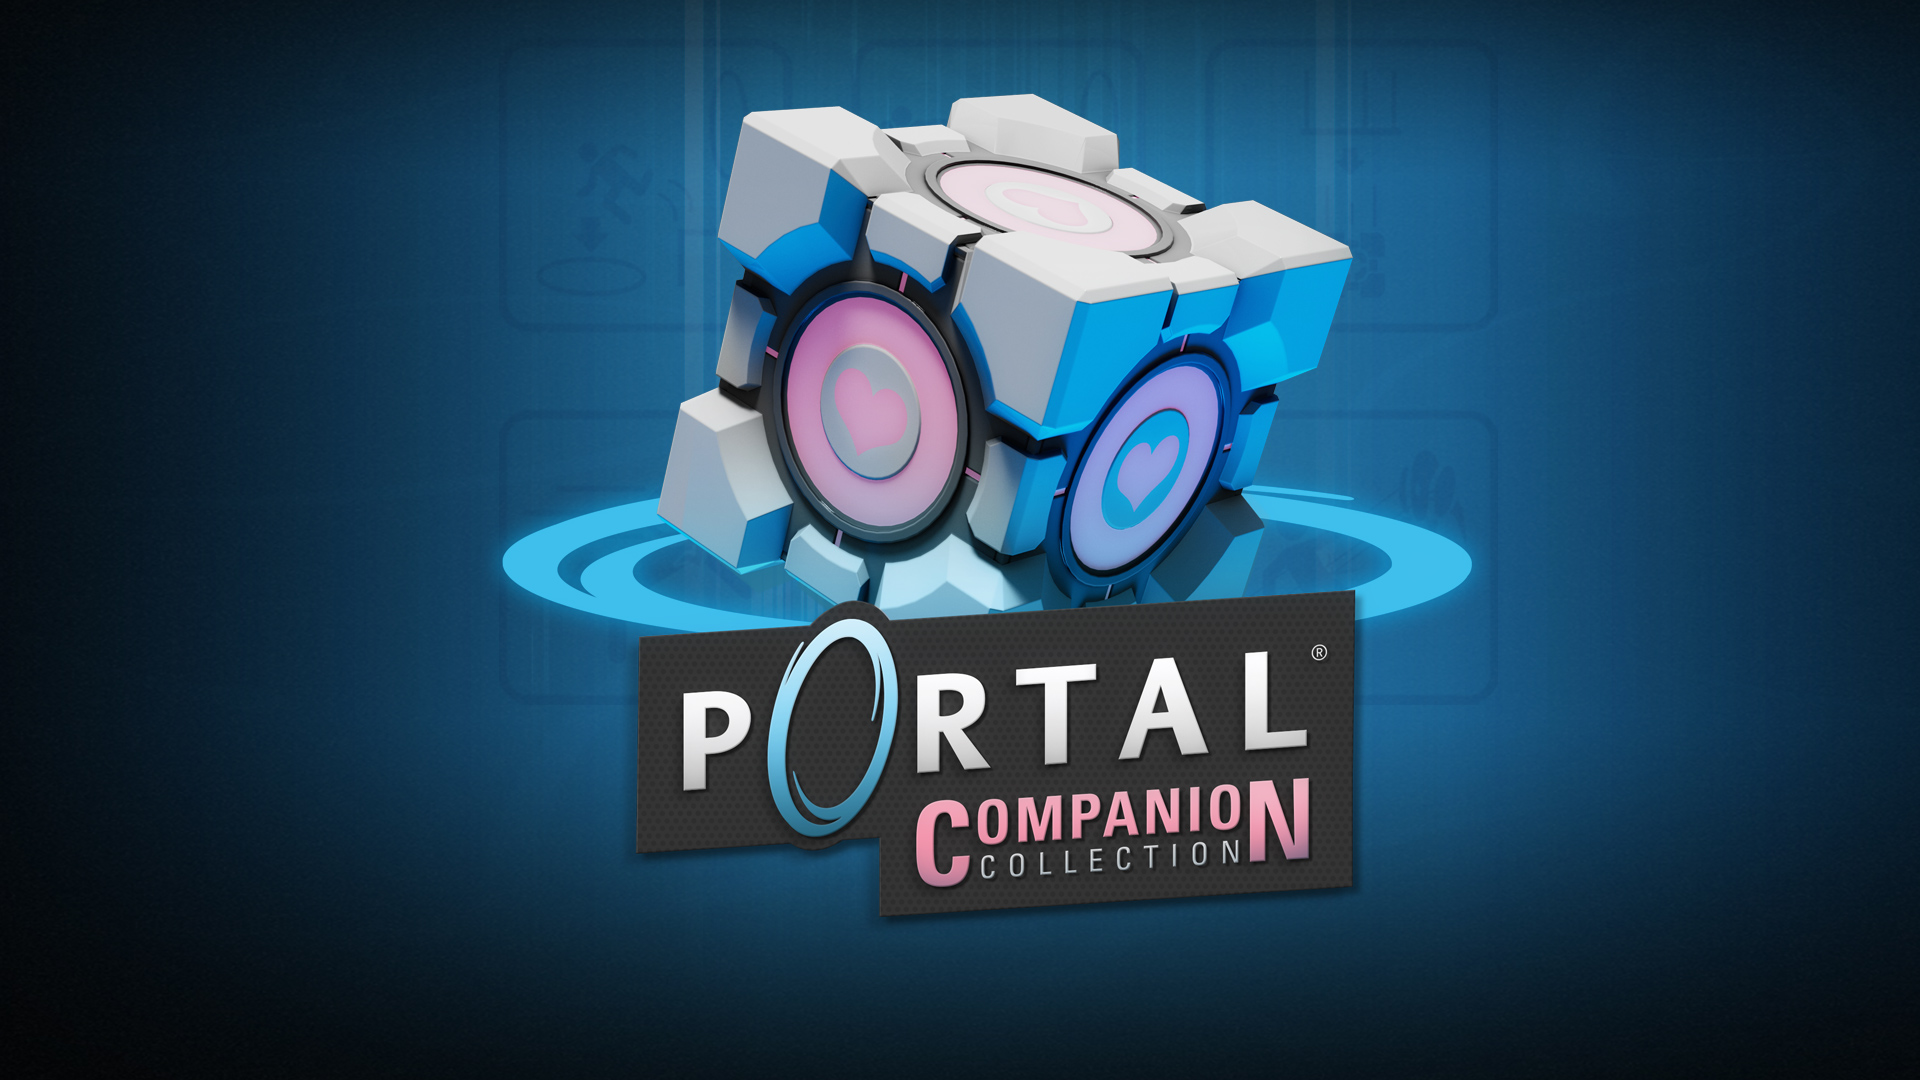 Portal companion collection cover 7